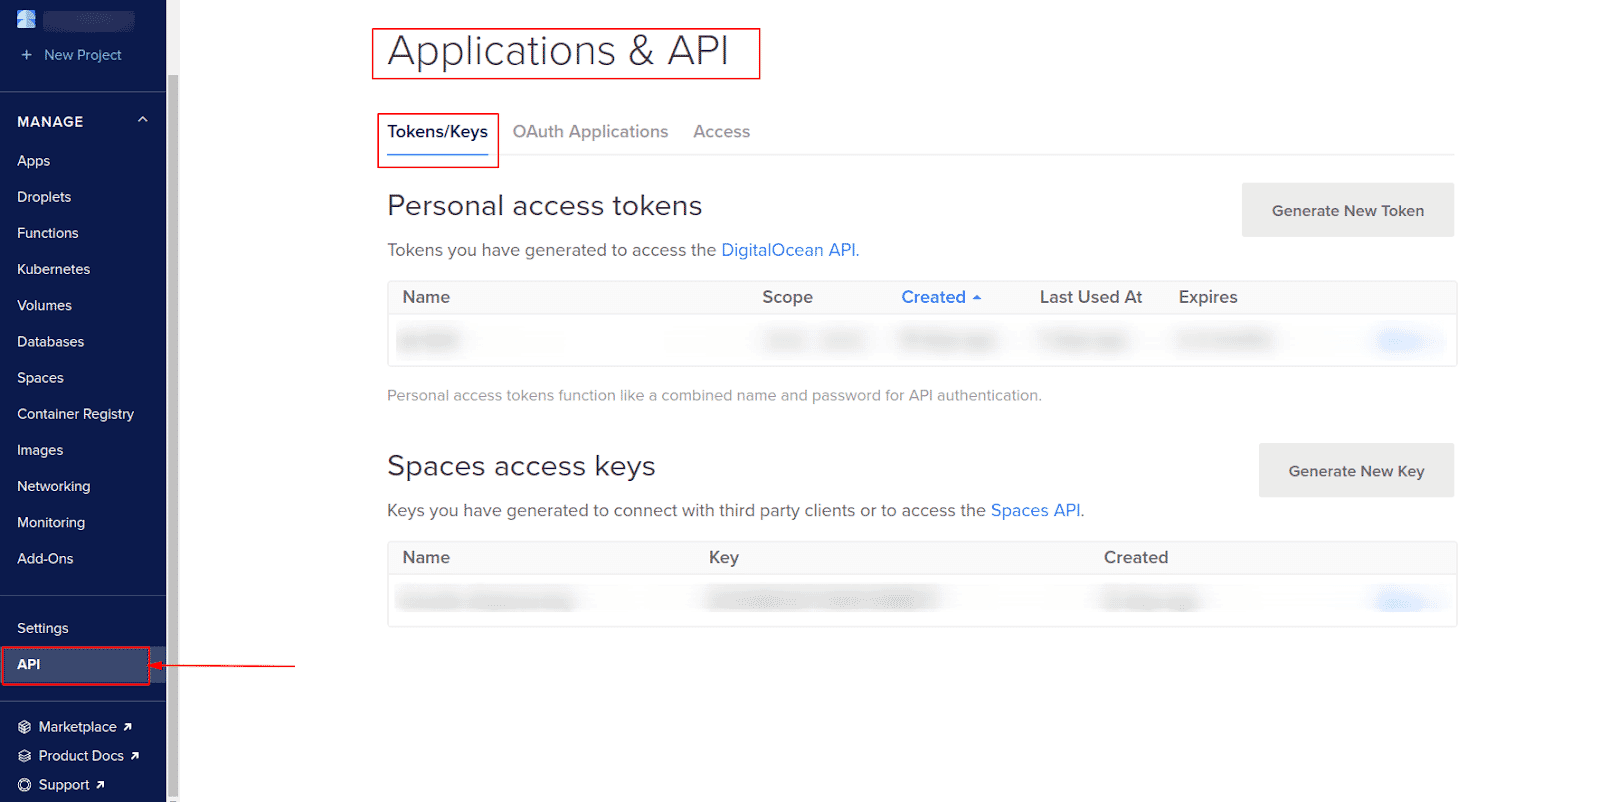 DigitalOcean Applications & API